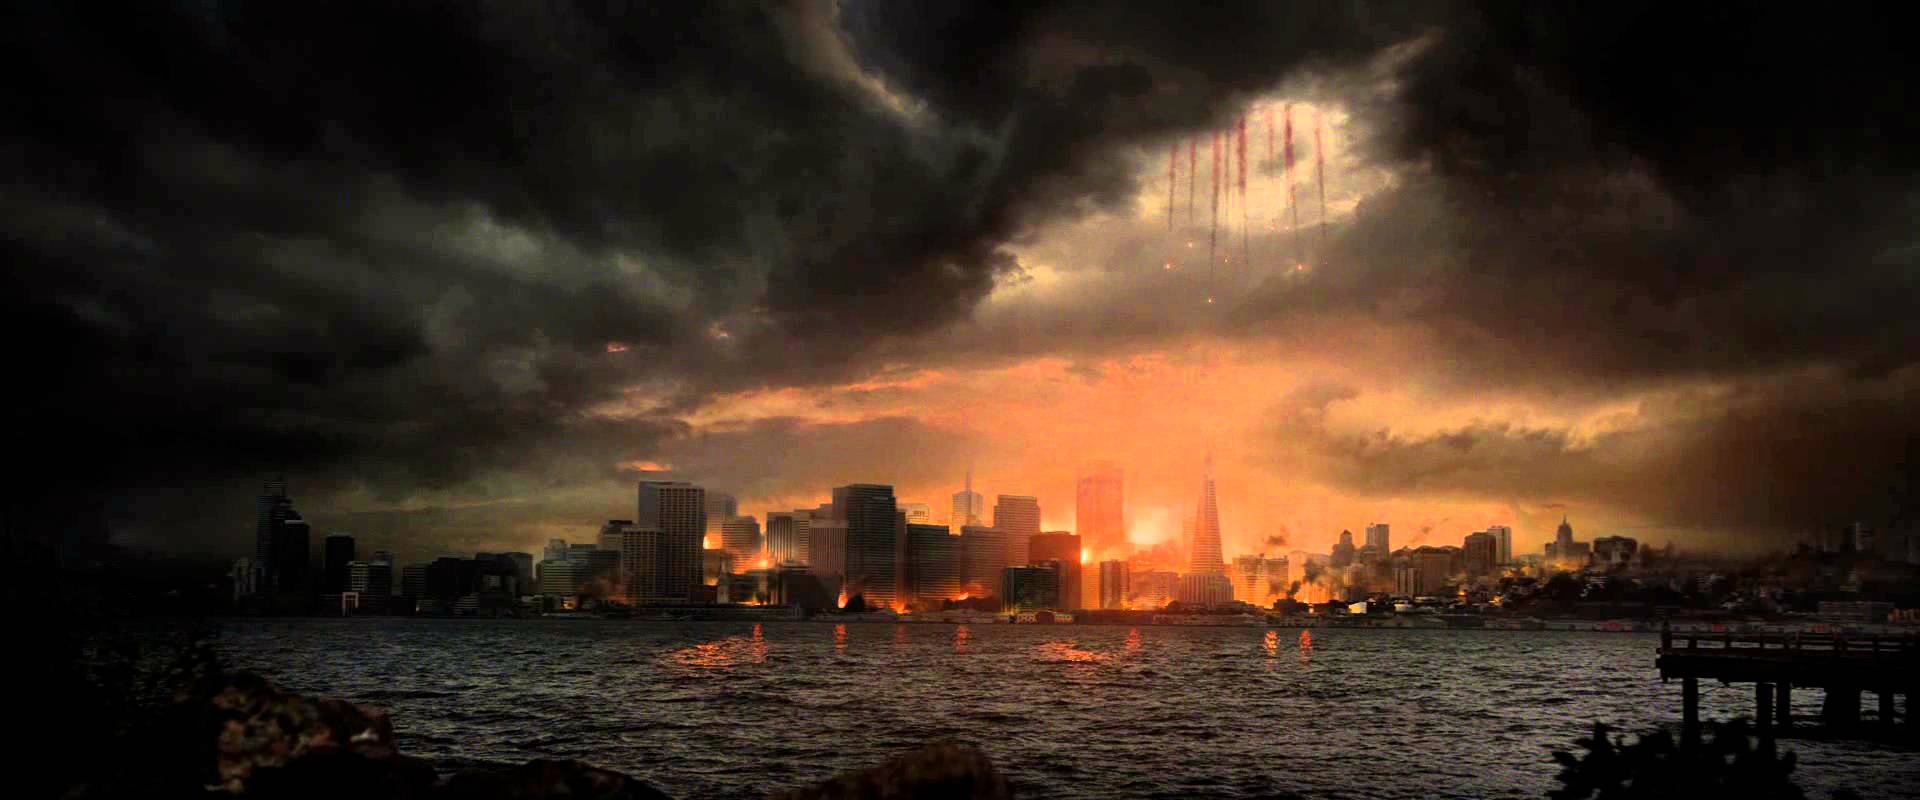 image For > Godzilla 2014 iPhone Wallpaper